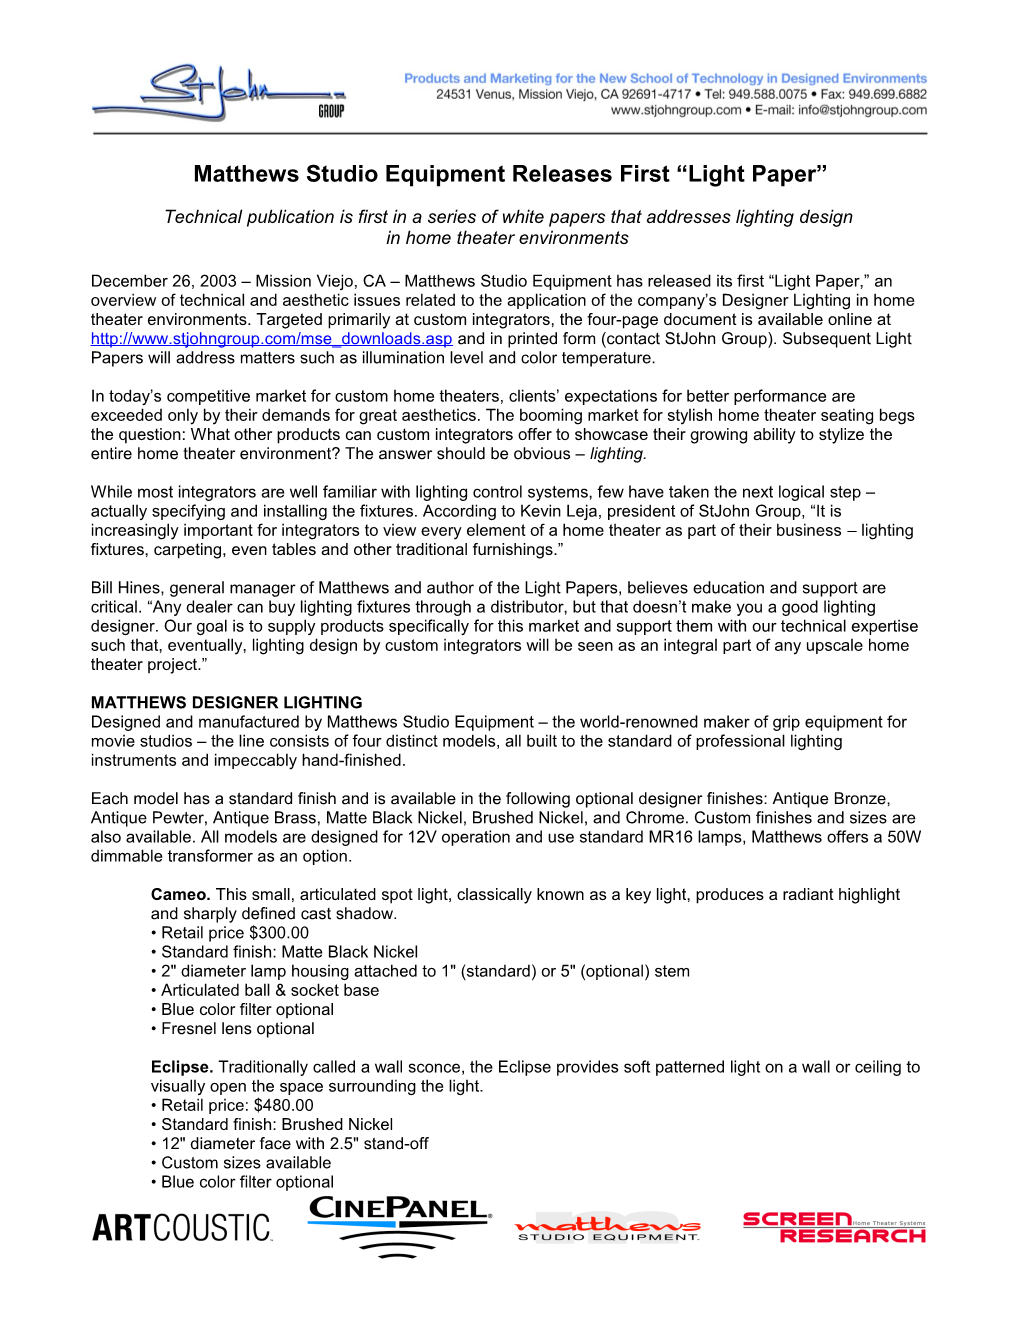 Matthews Studio Equipment Releases First Light Paper